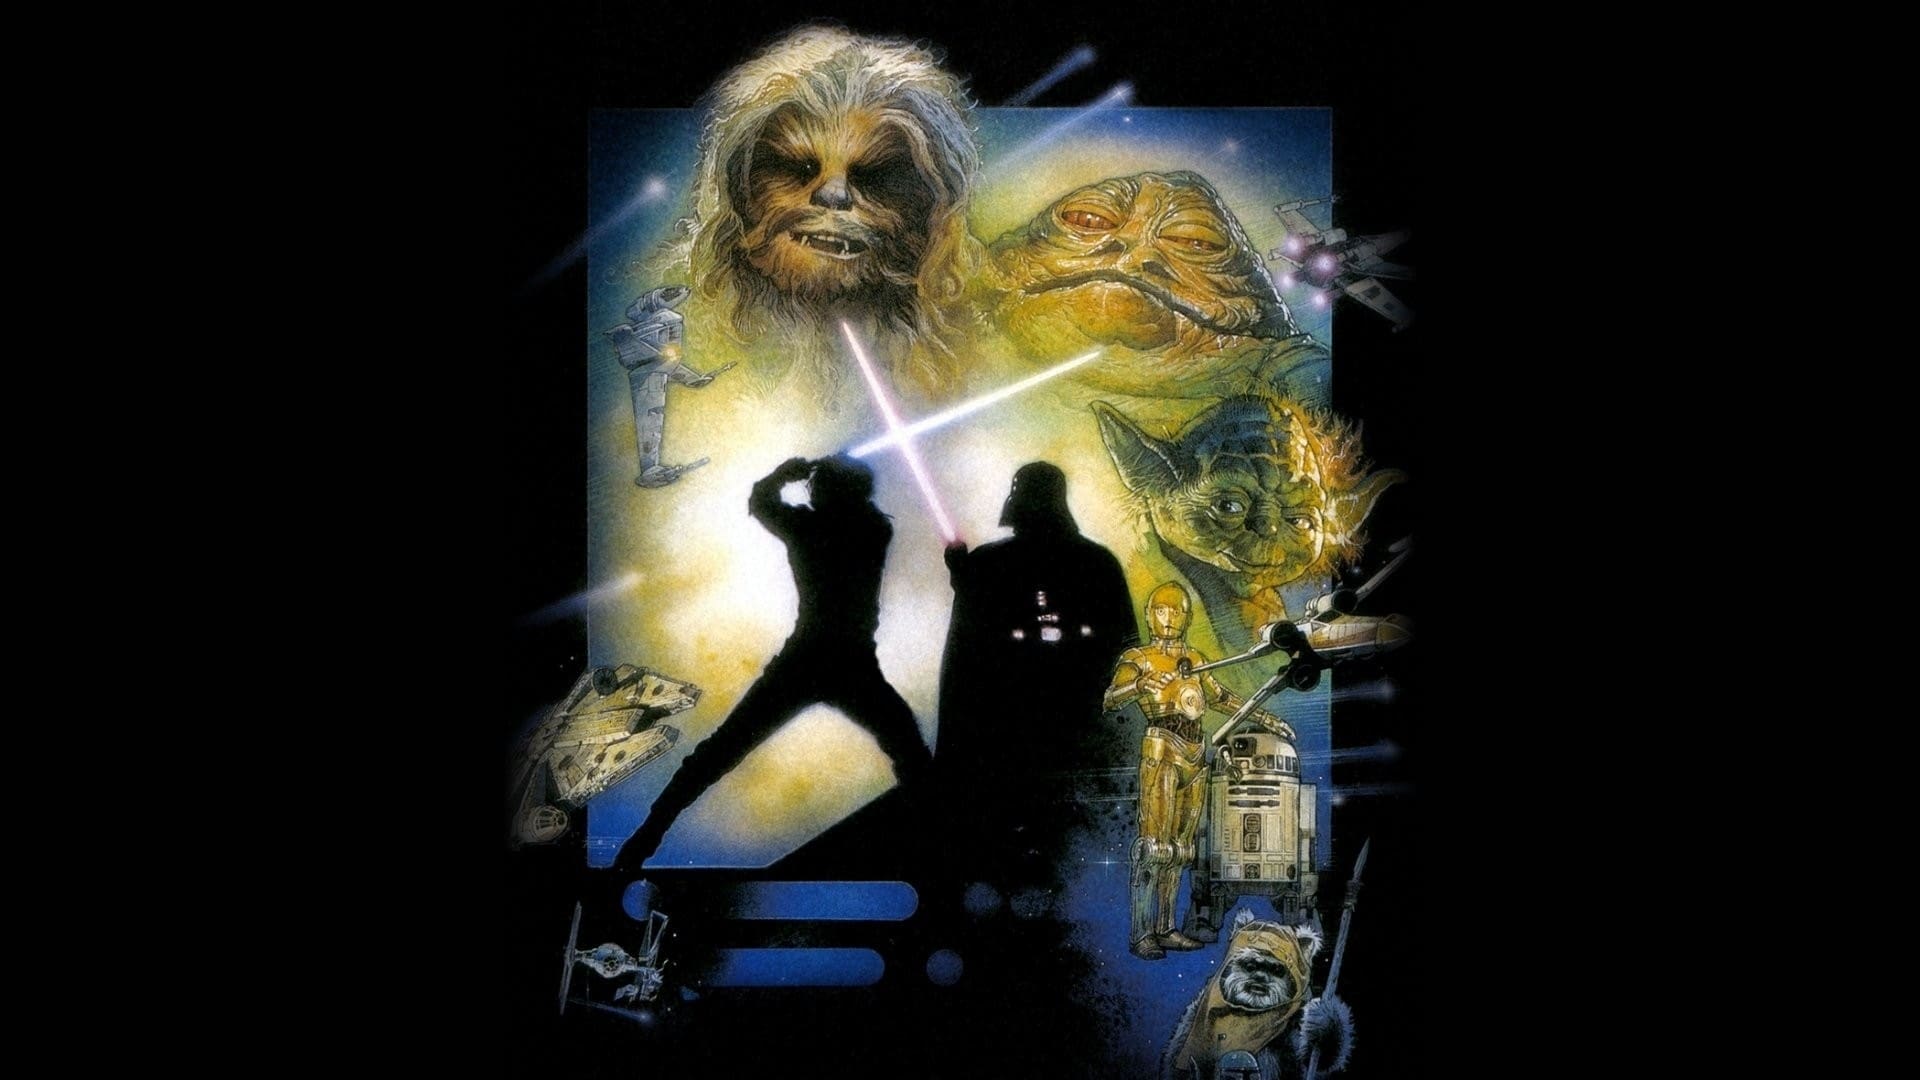 Image du film Star Wars, édition spéciale : le retour du Jedi vvnnwfsoycqcr5jjjvkakjkrh5sjpg